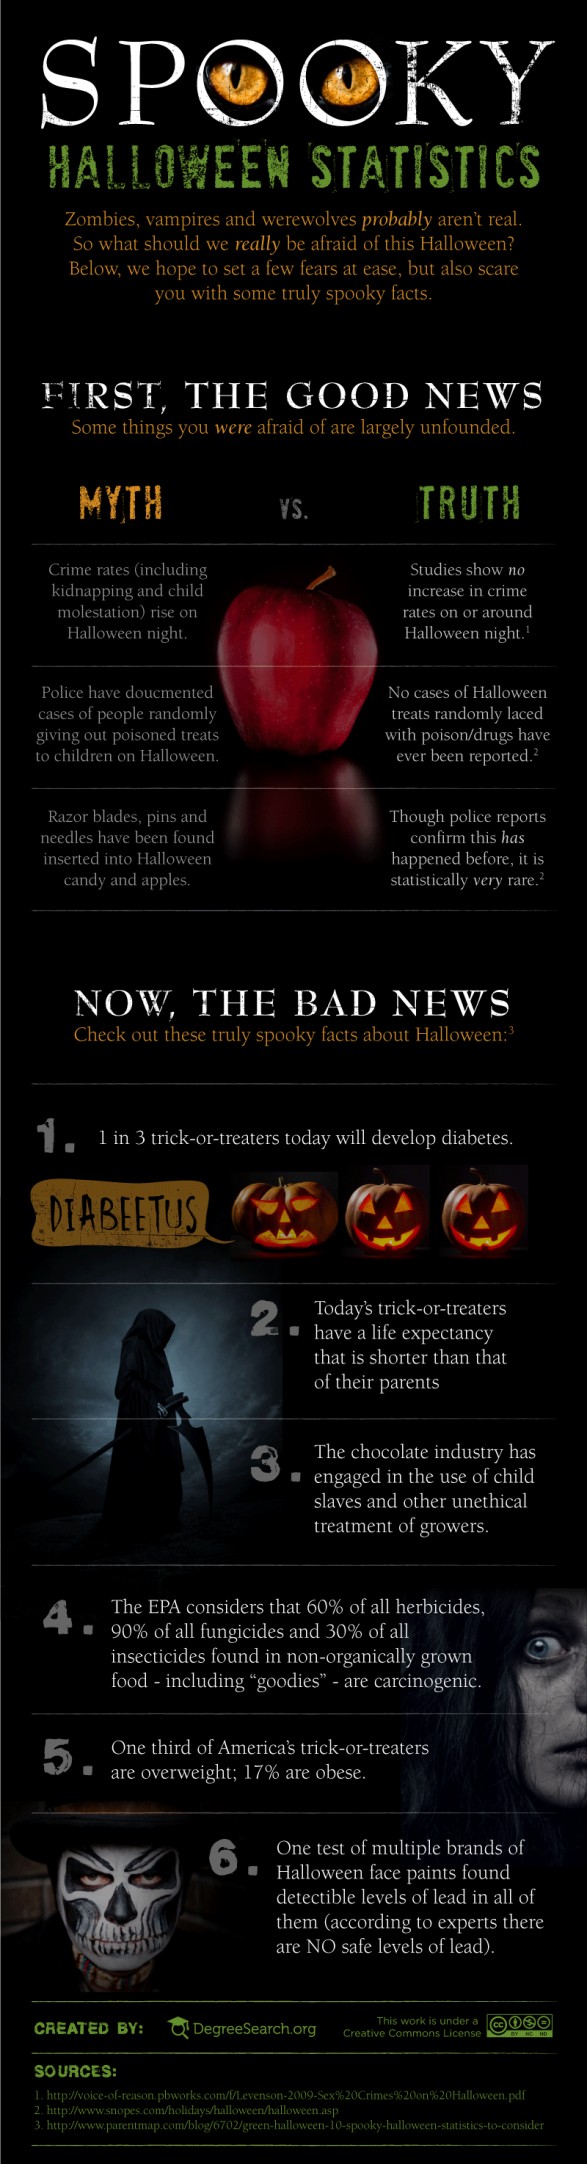 Spooky Halloween Statistics